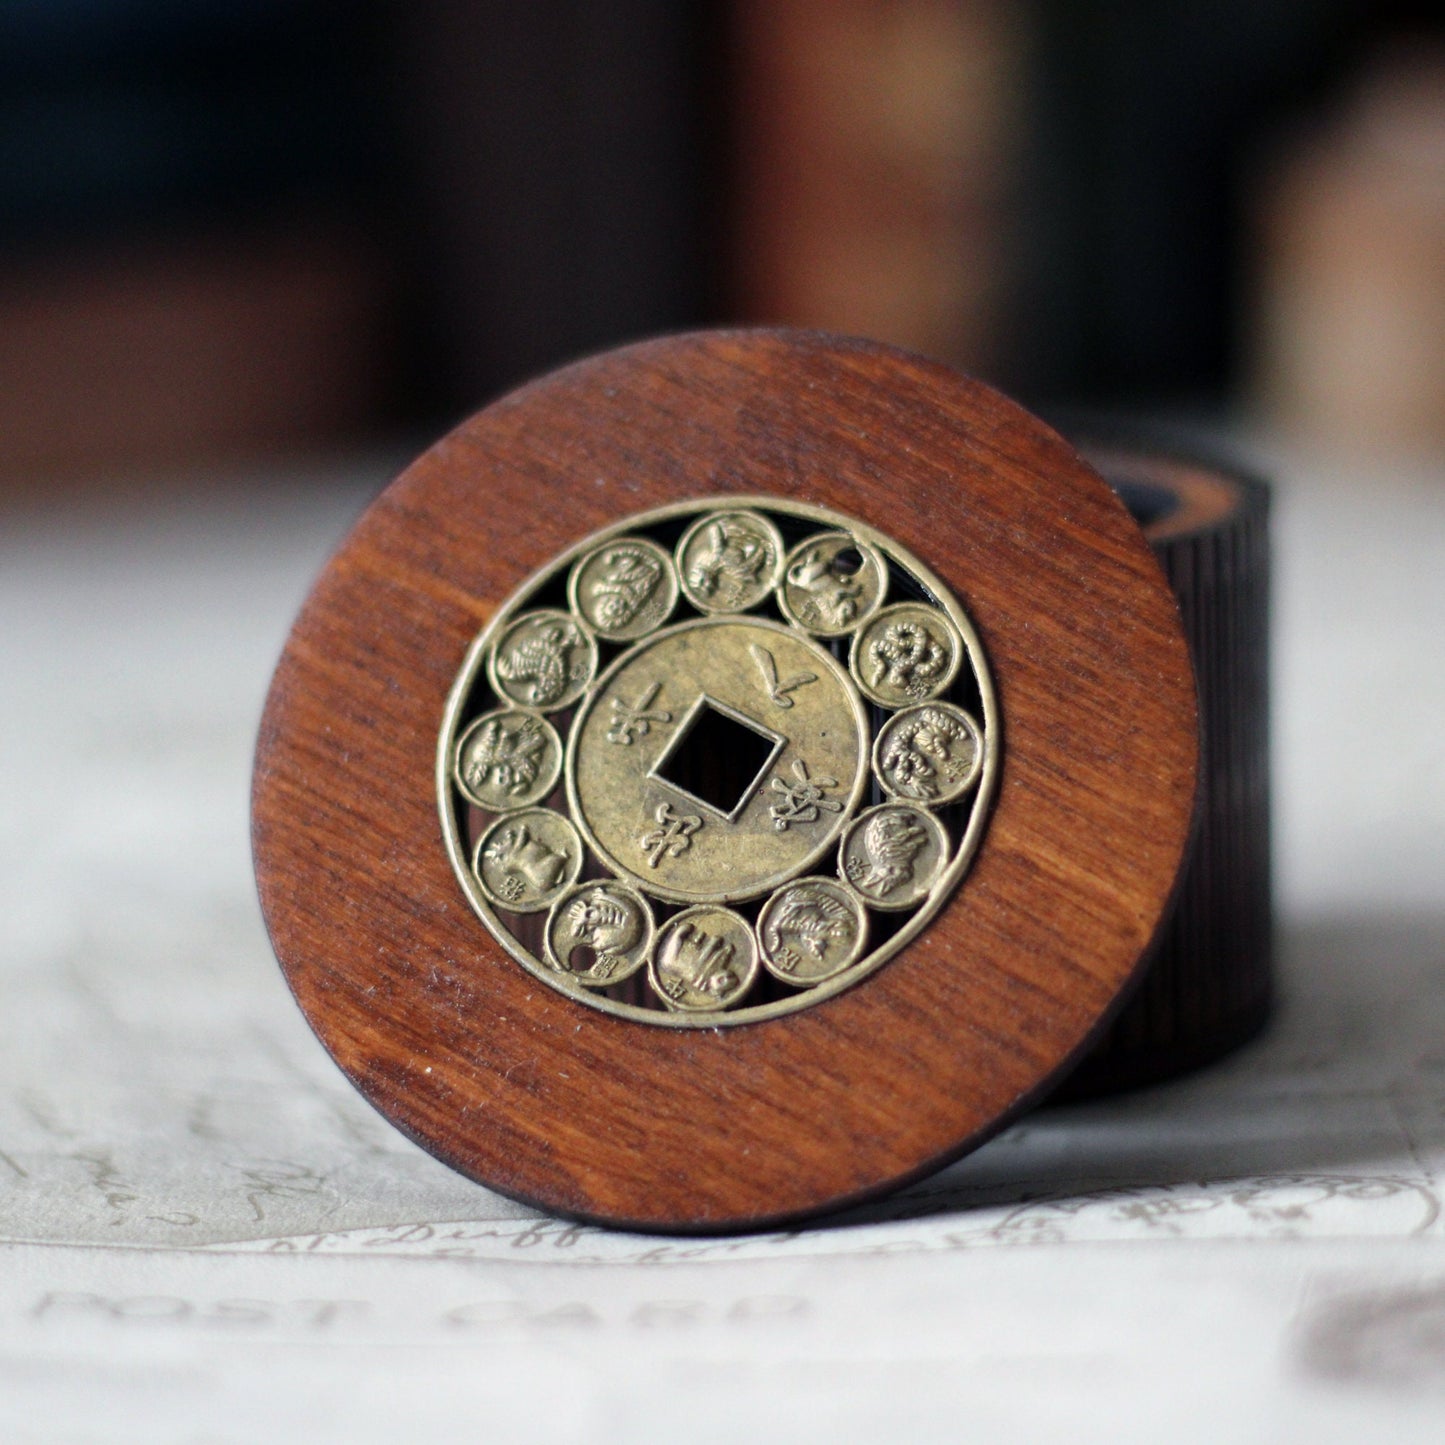 Chinese Zodiac Amulet Personalised wooden keepsake box with living hinge side, gothic jewellery box, Victorian style custom trinket